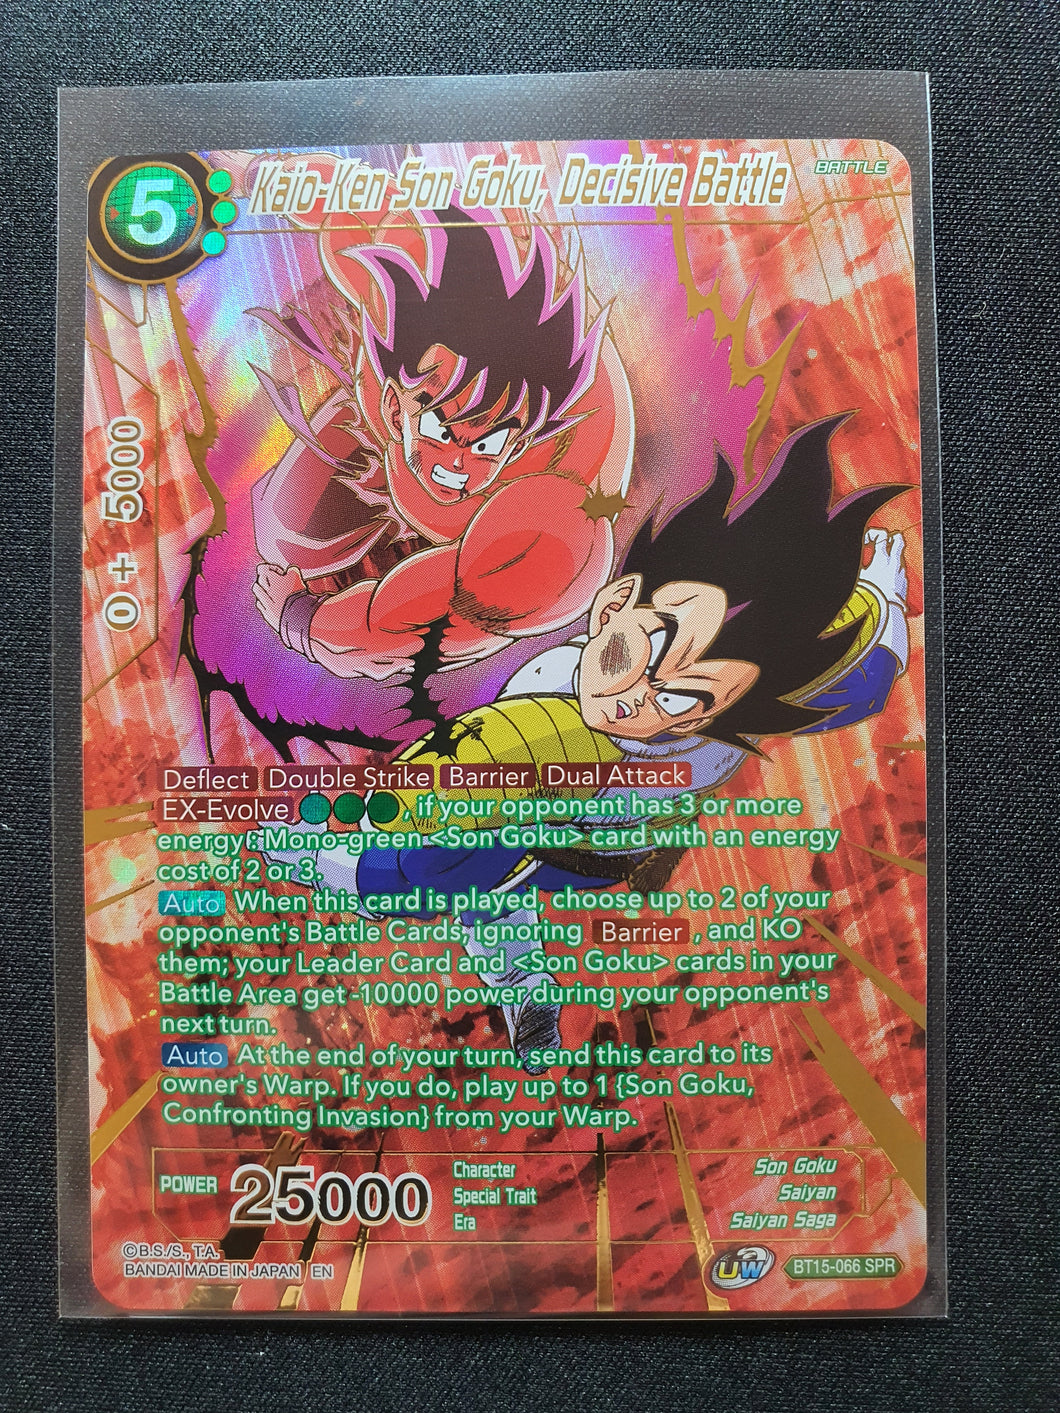 Kaio-Ken Son Goku, Decisive Battle, BT15-066 SPR Special Rare - Saiyan Showdown